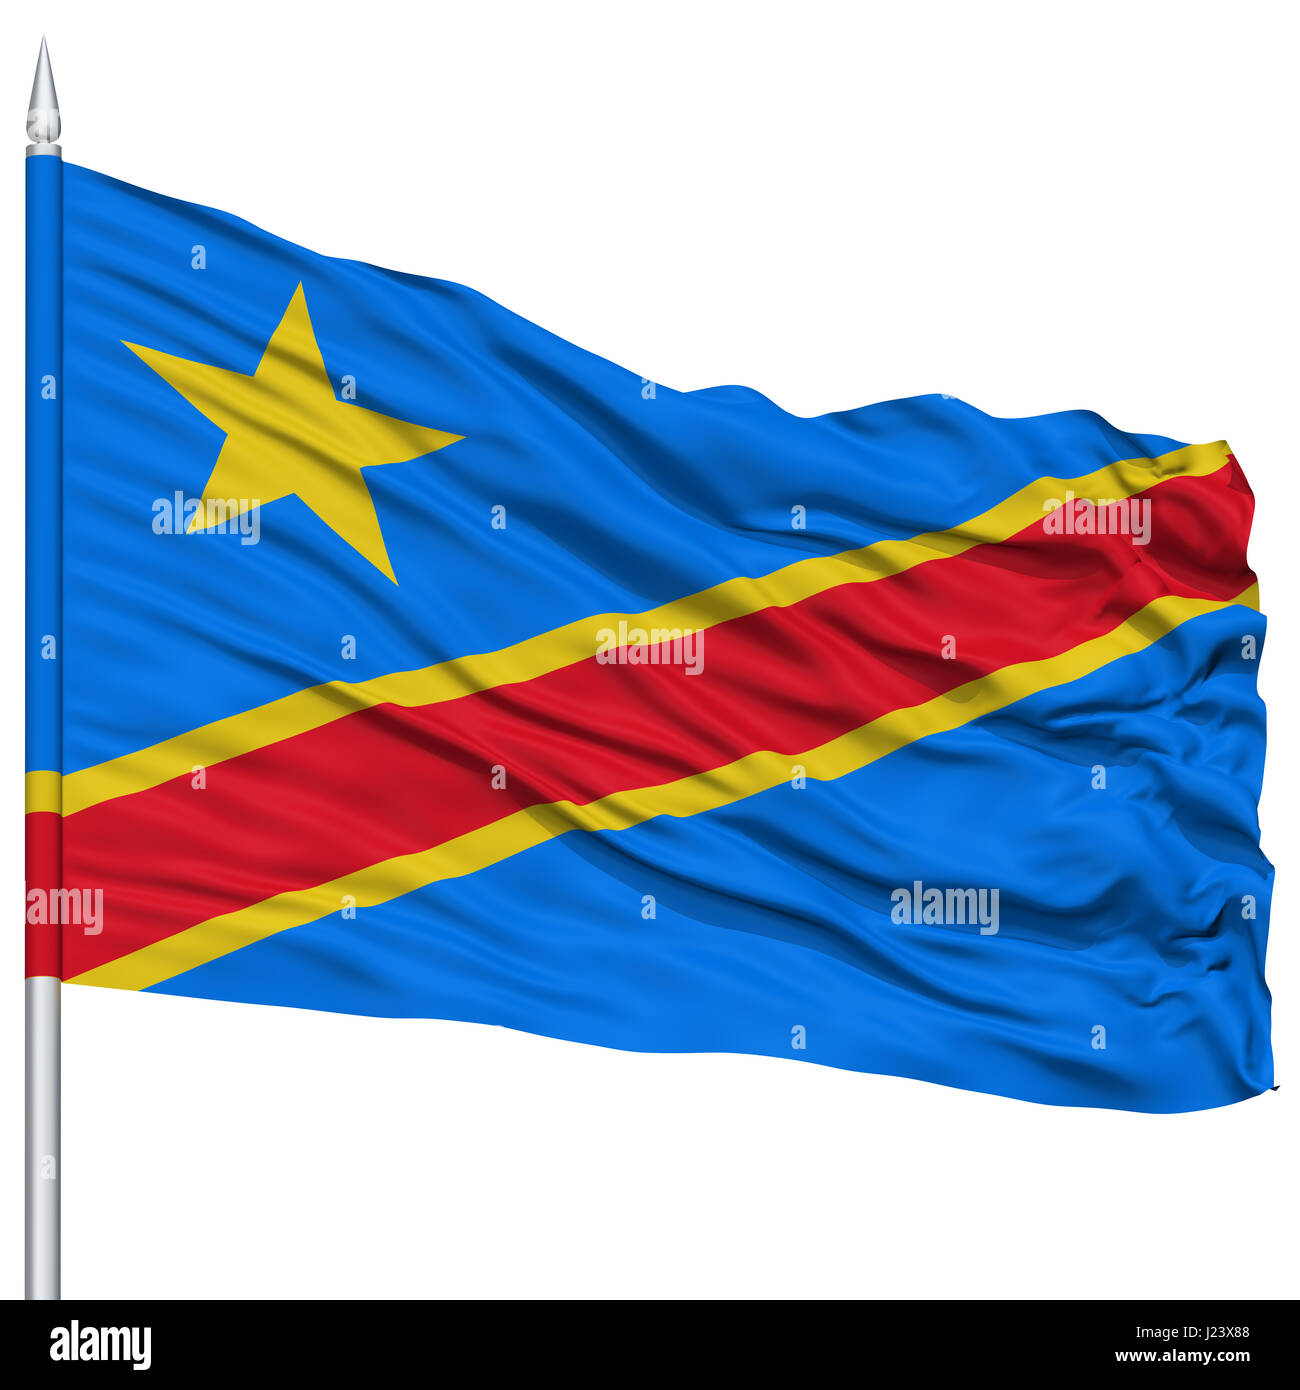 https://c8.alamy.com/comp/J23X88/democratic-republic-of-congo-flag-on-flagpole-kinshasa-J23X88.jpg